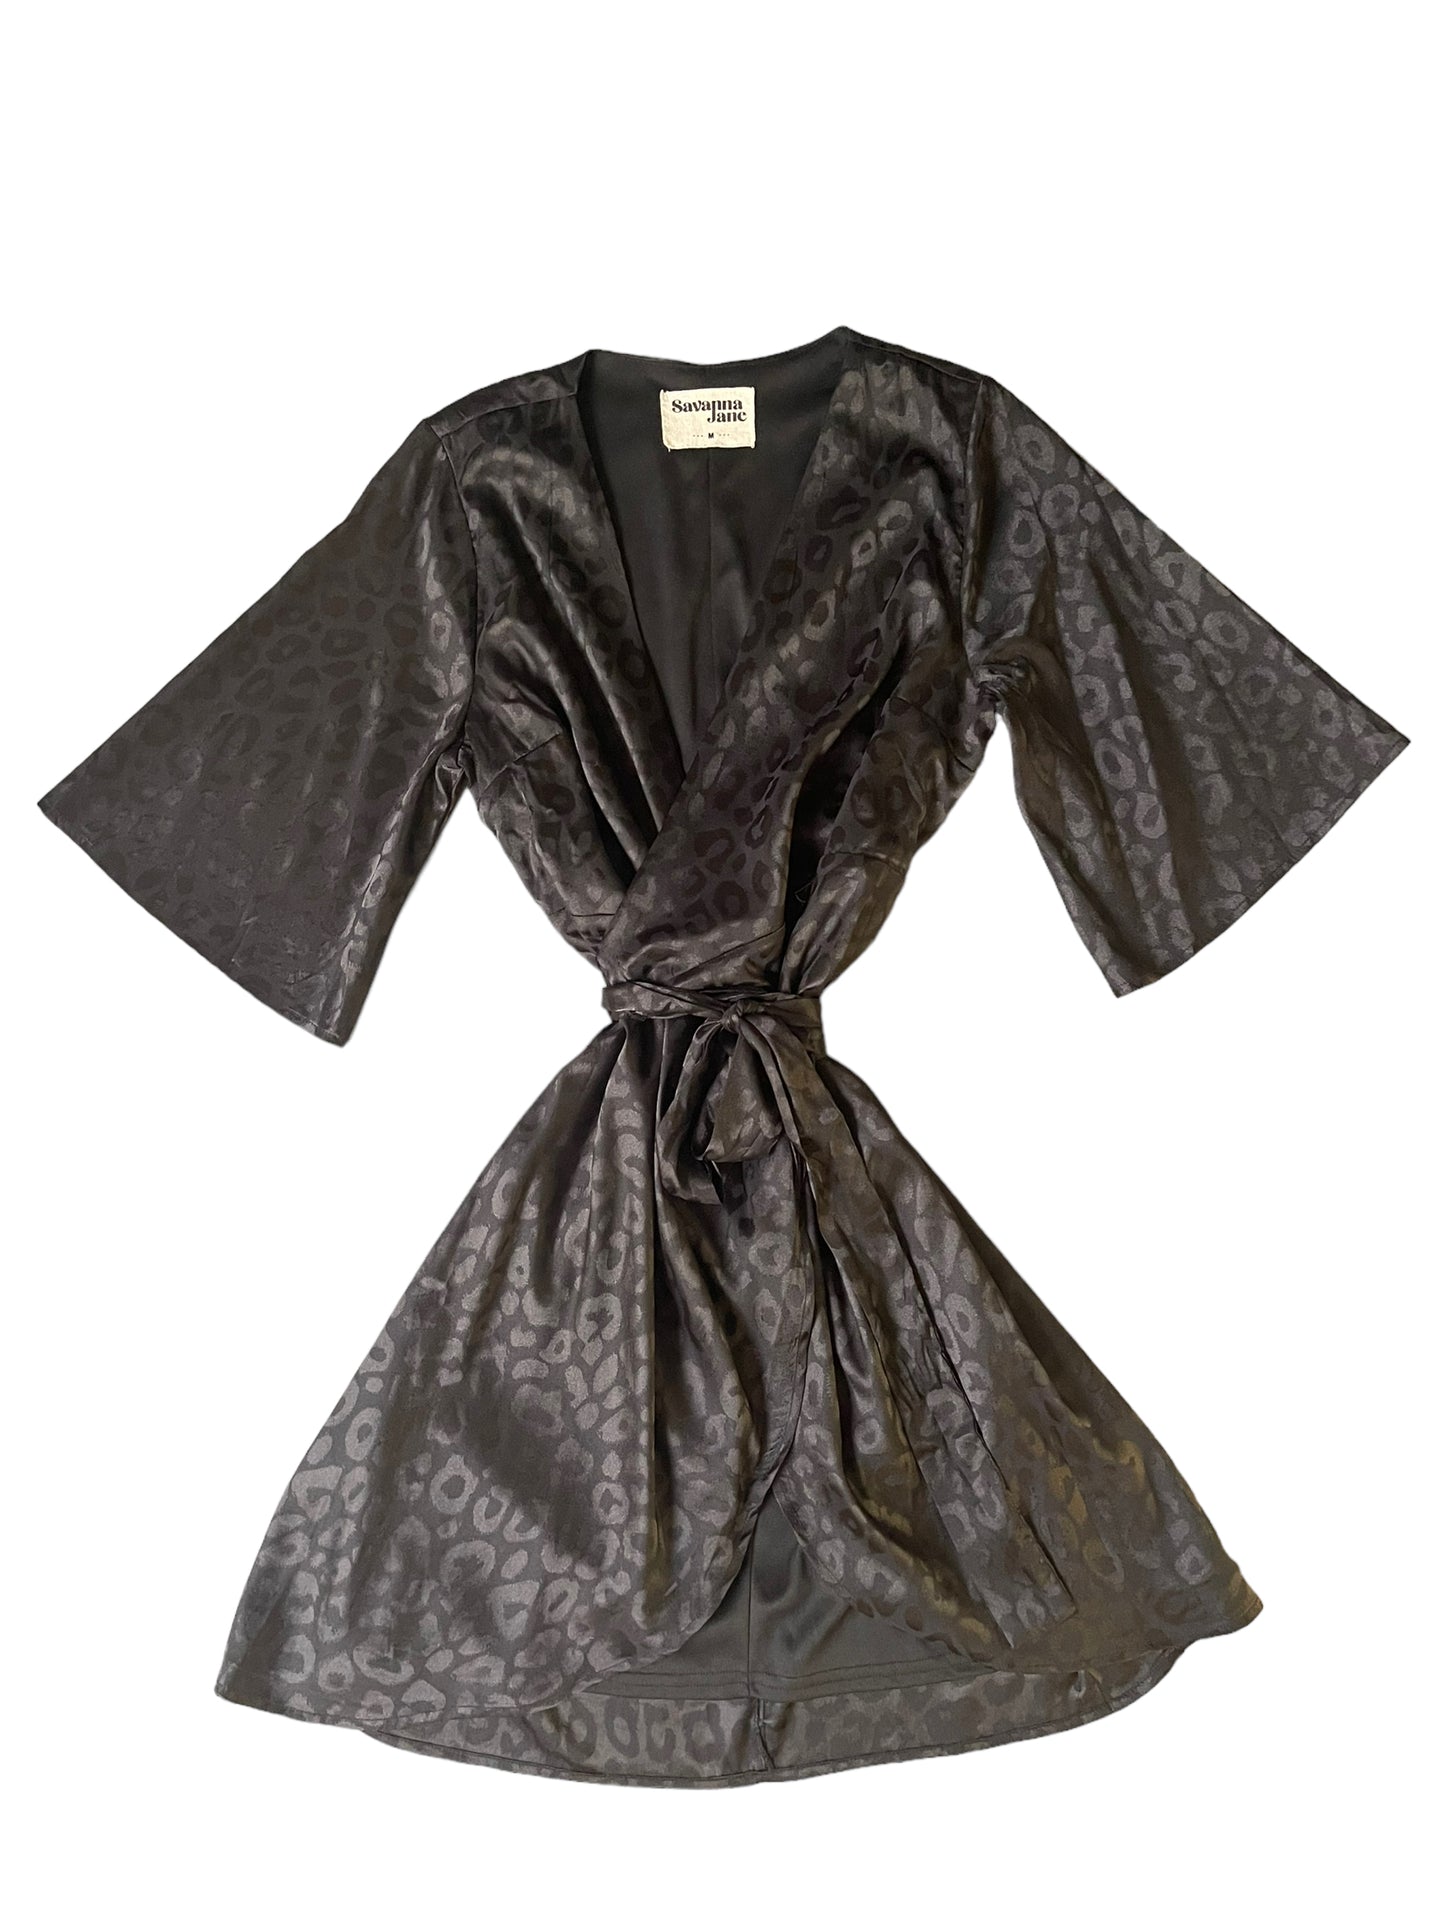 Savanna Jane Silk Kimono Dress Size M